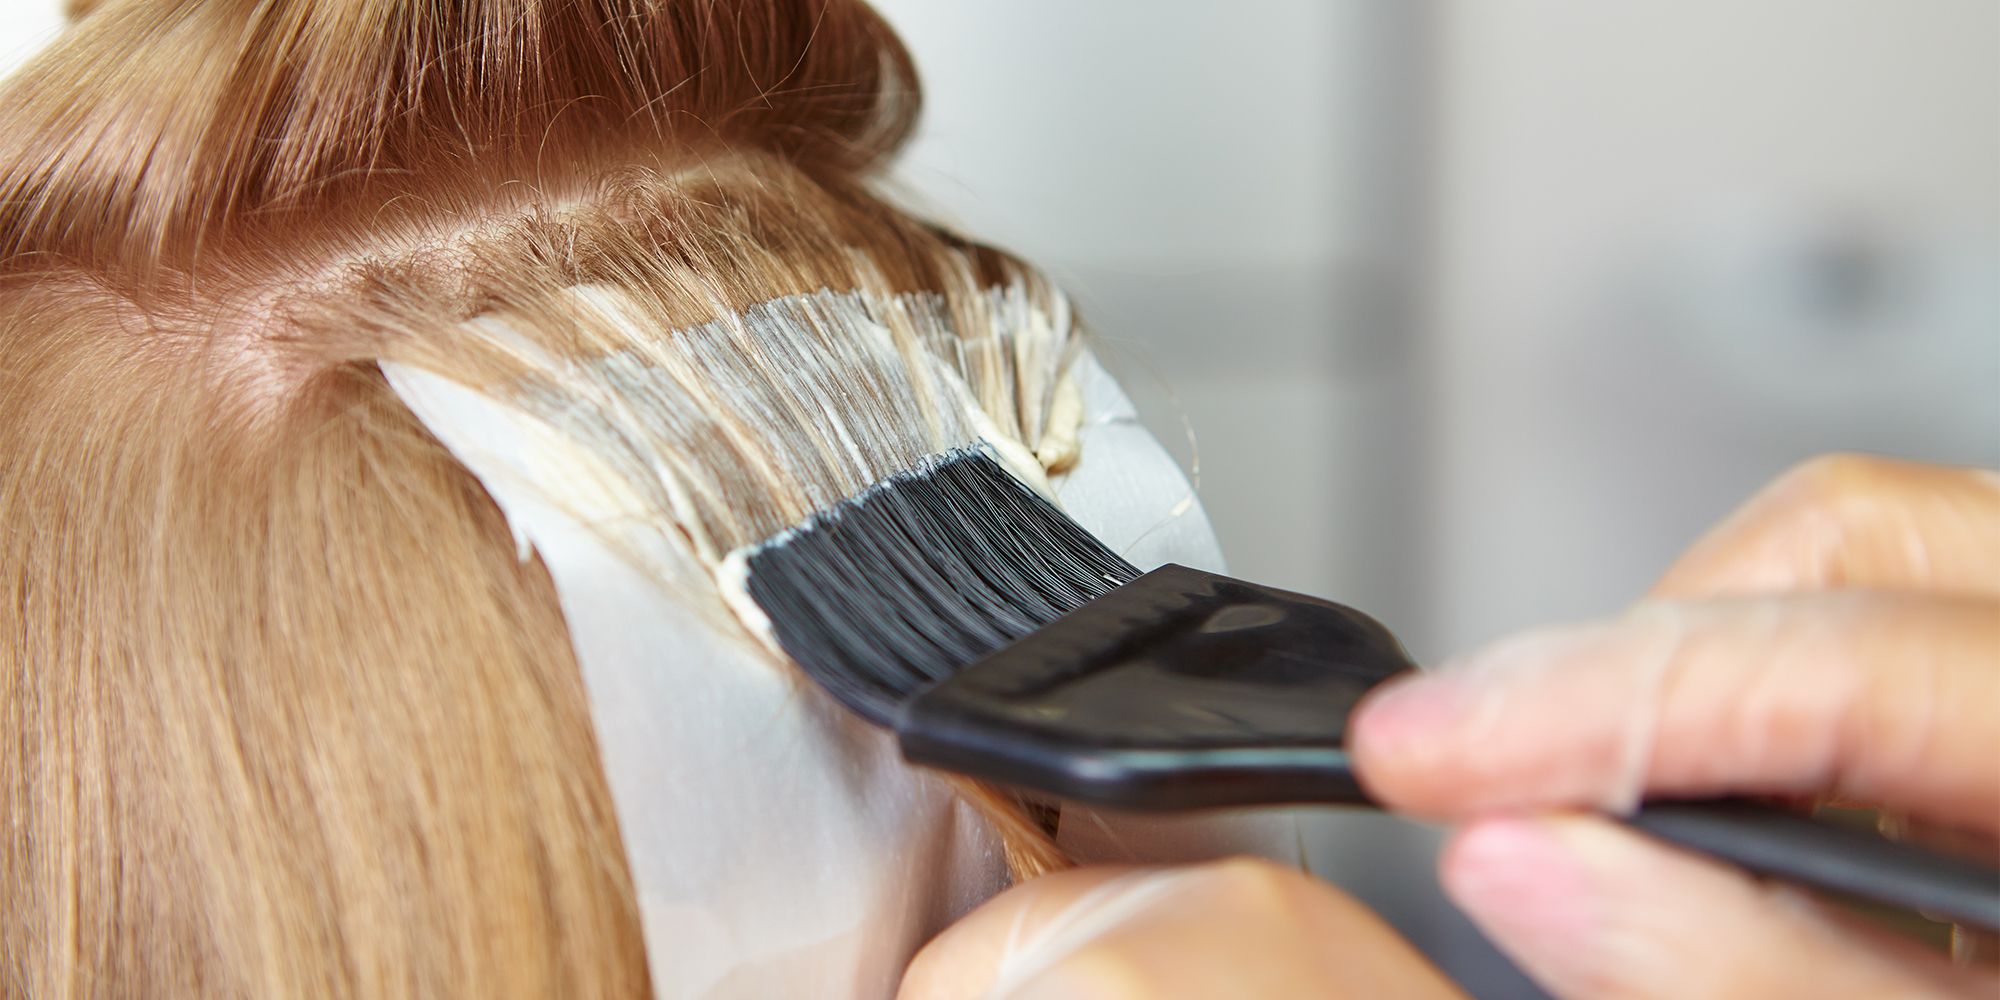 Why Should you Use Organic Hair Dye?